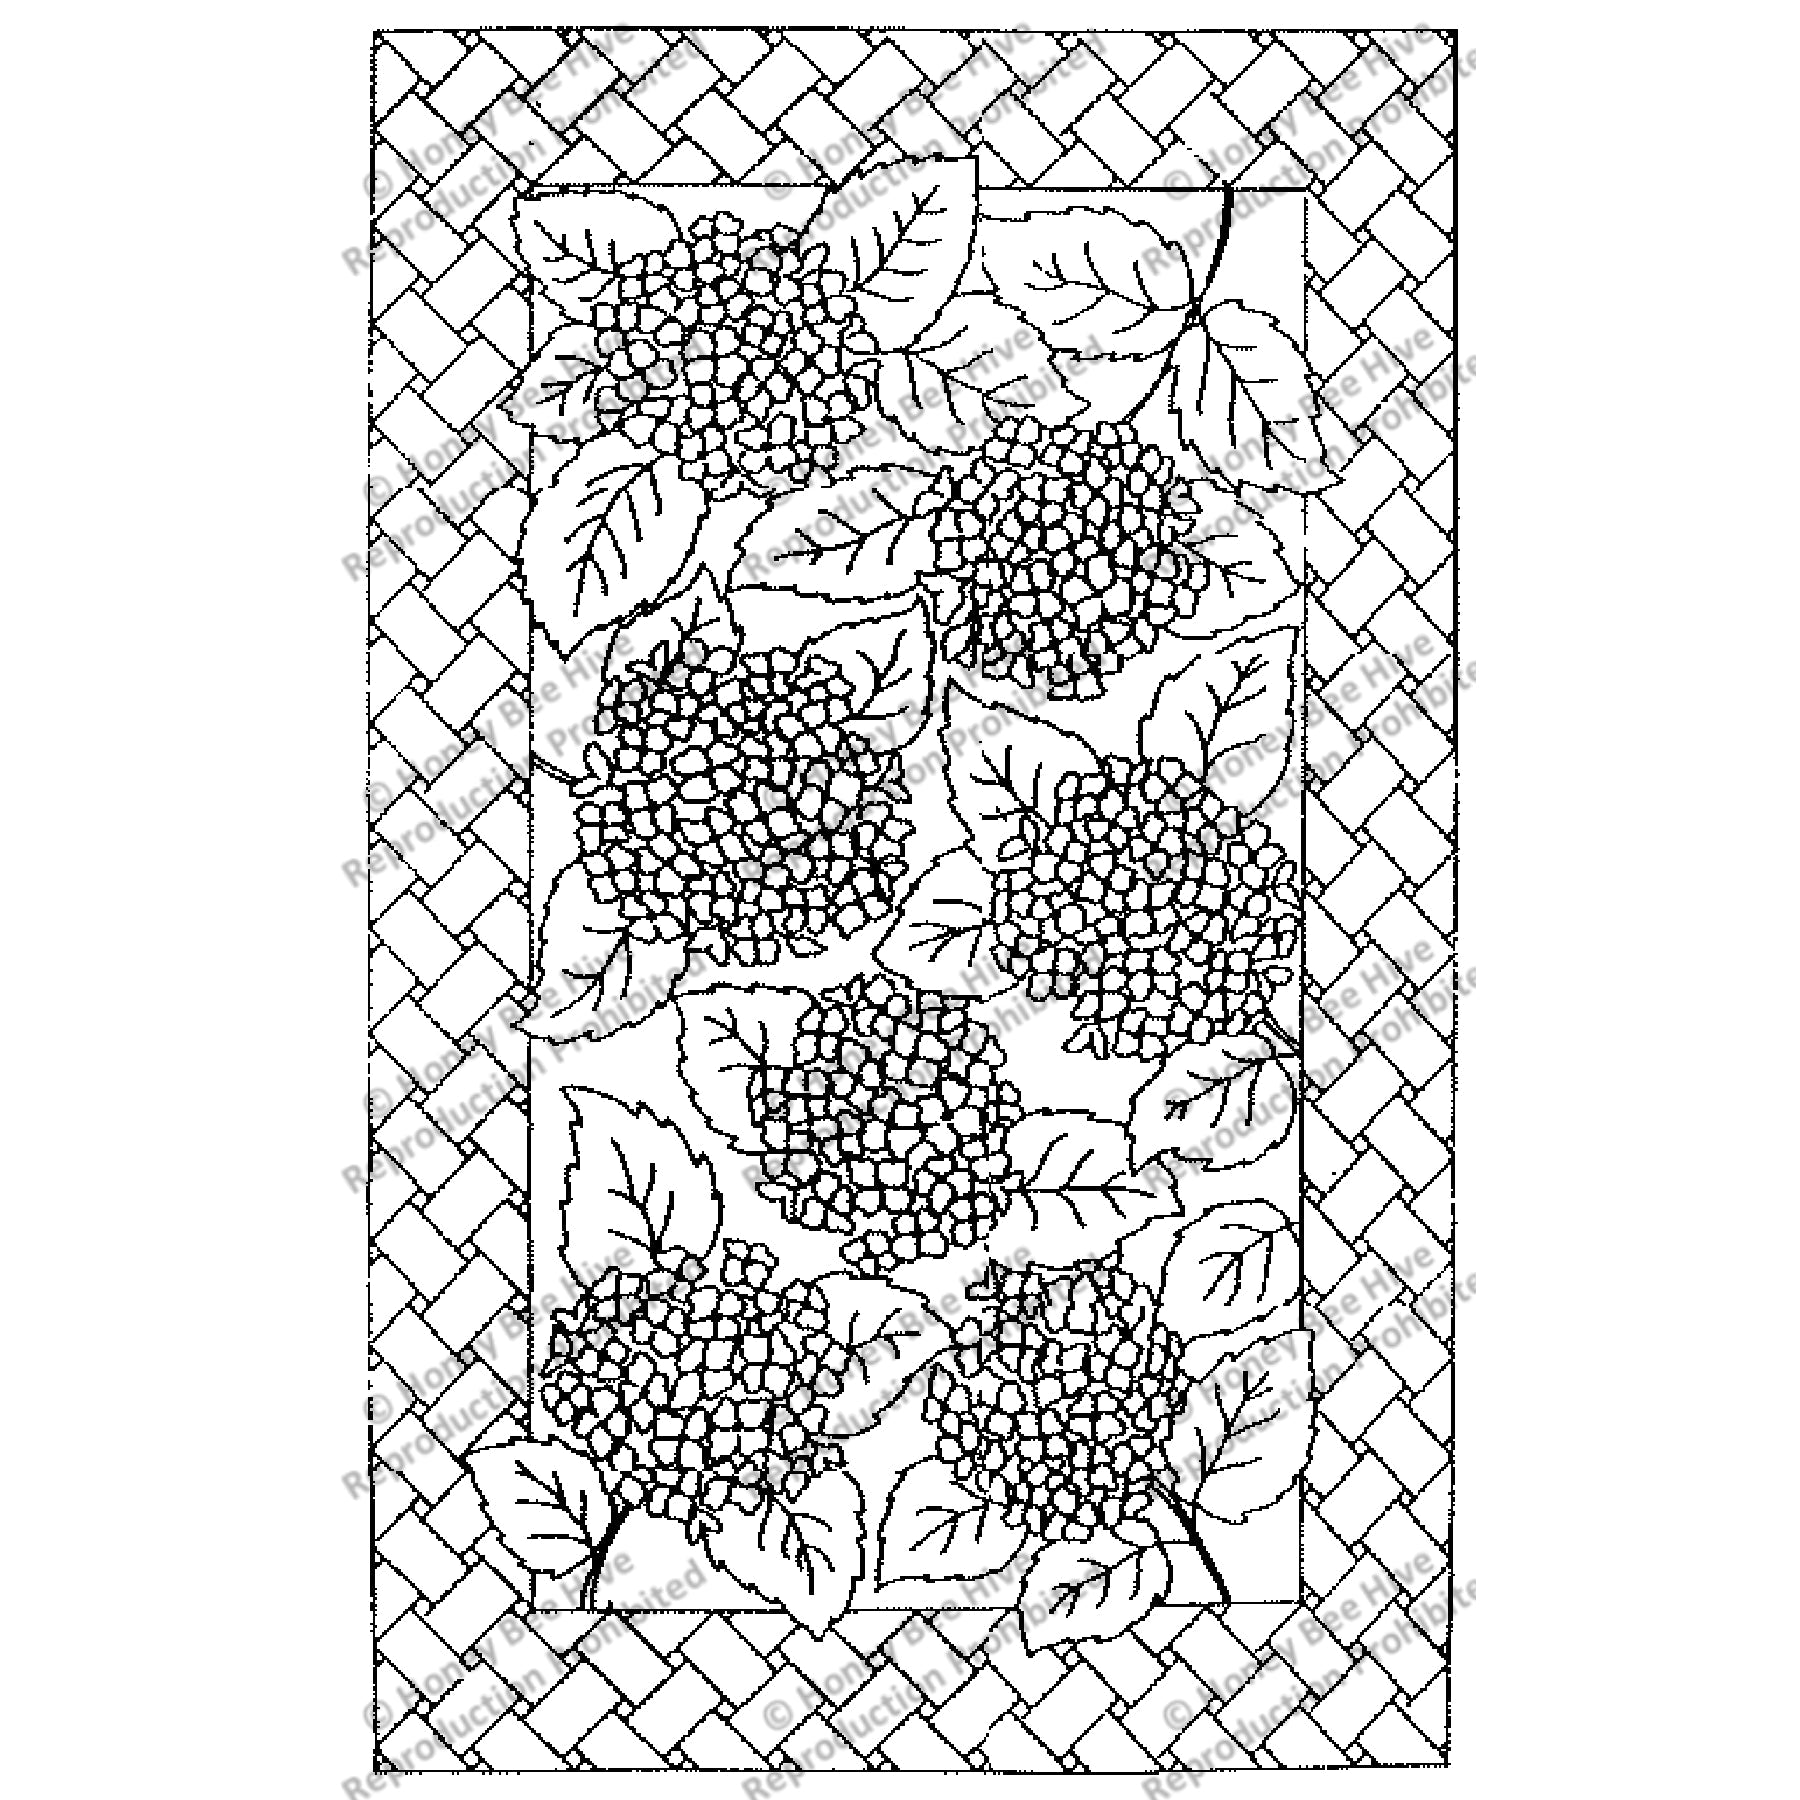 Hydrangeas, rug hooking pattern